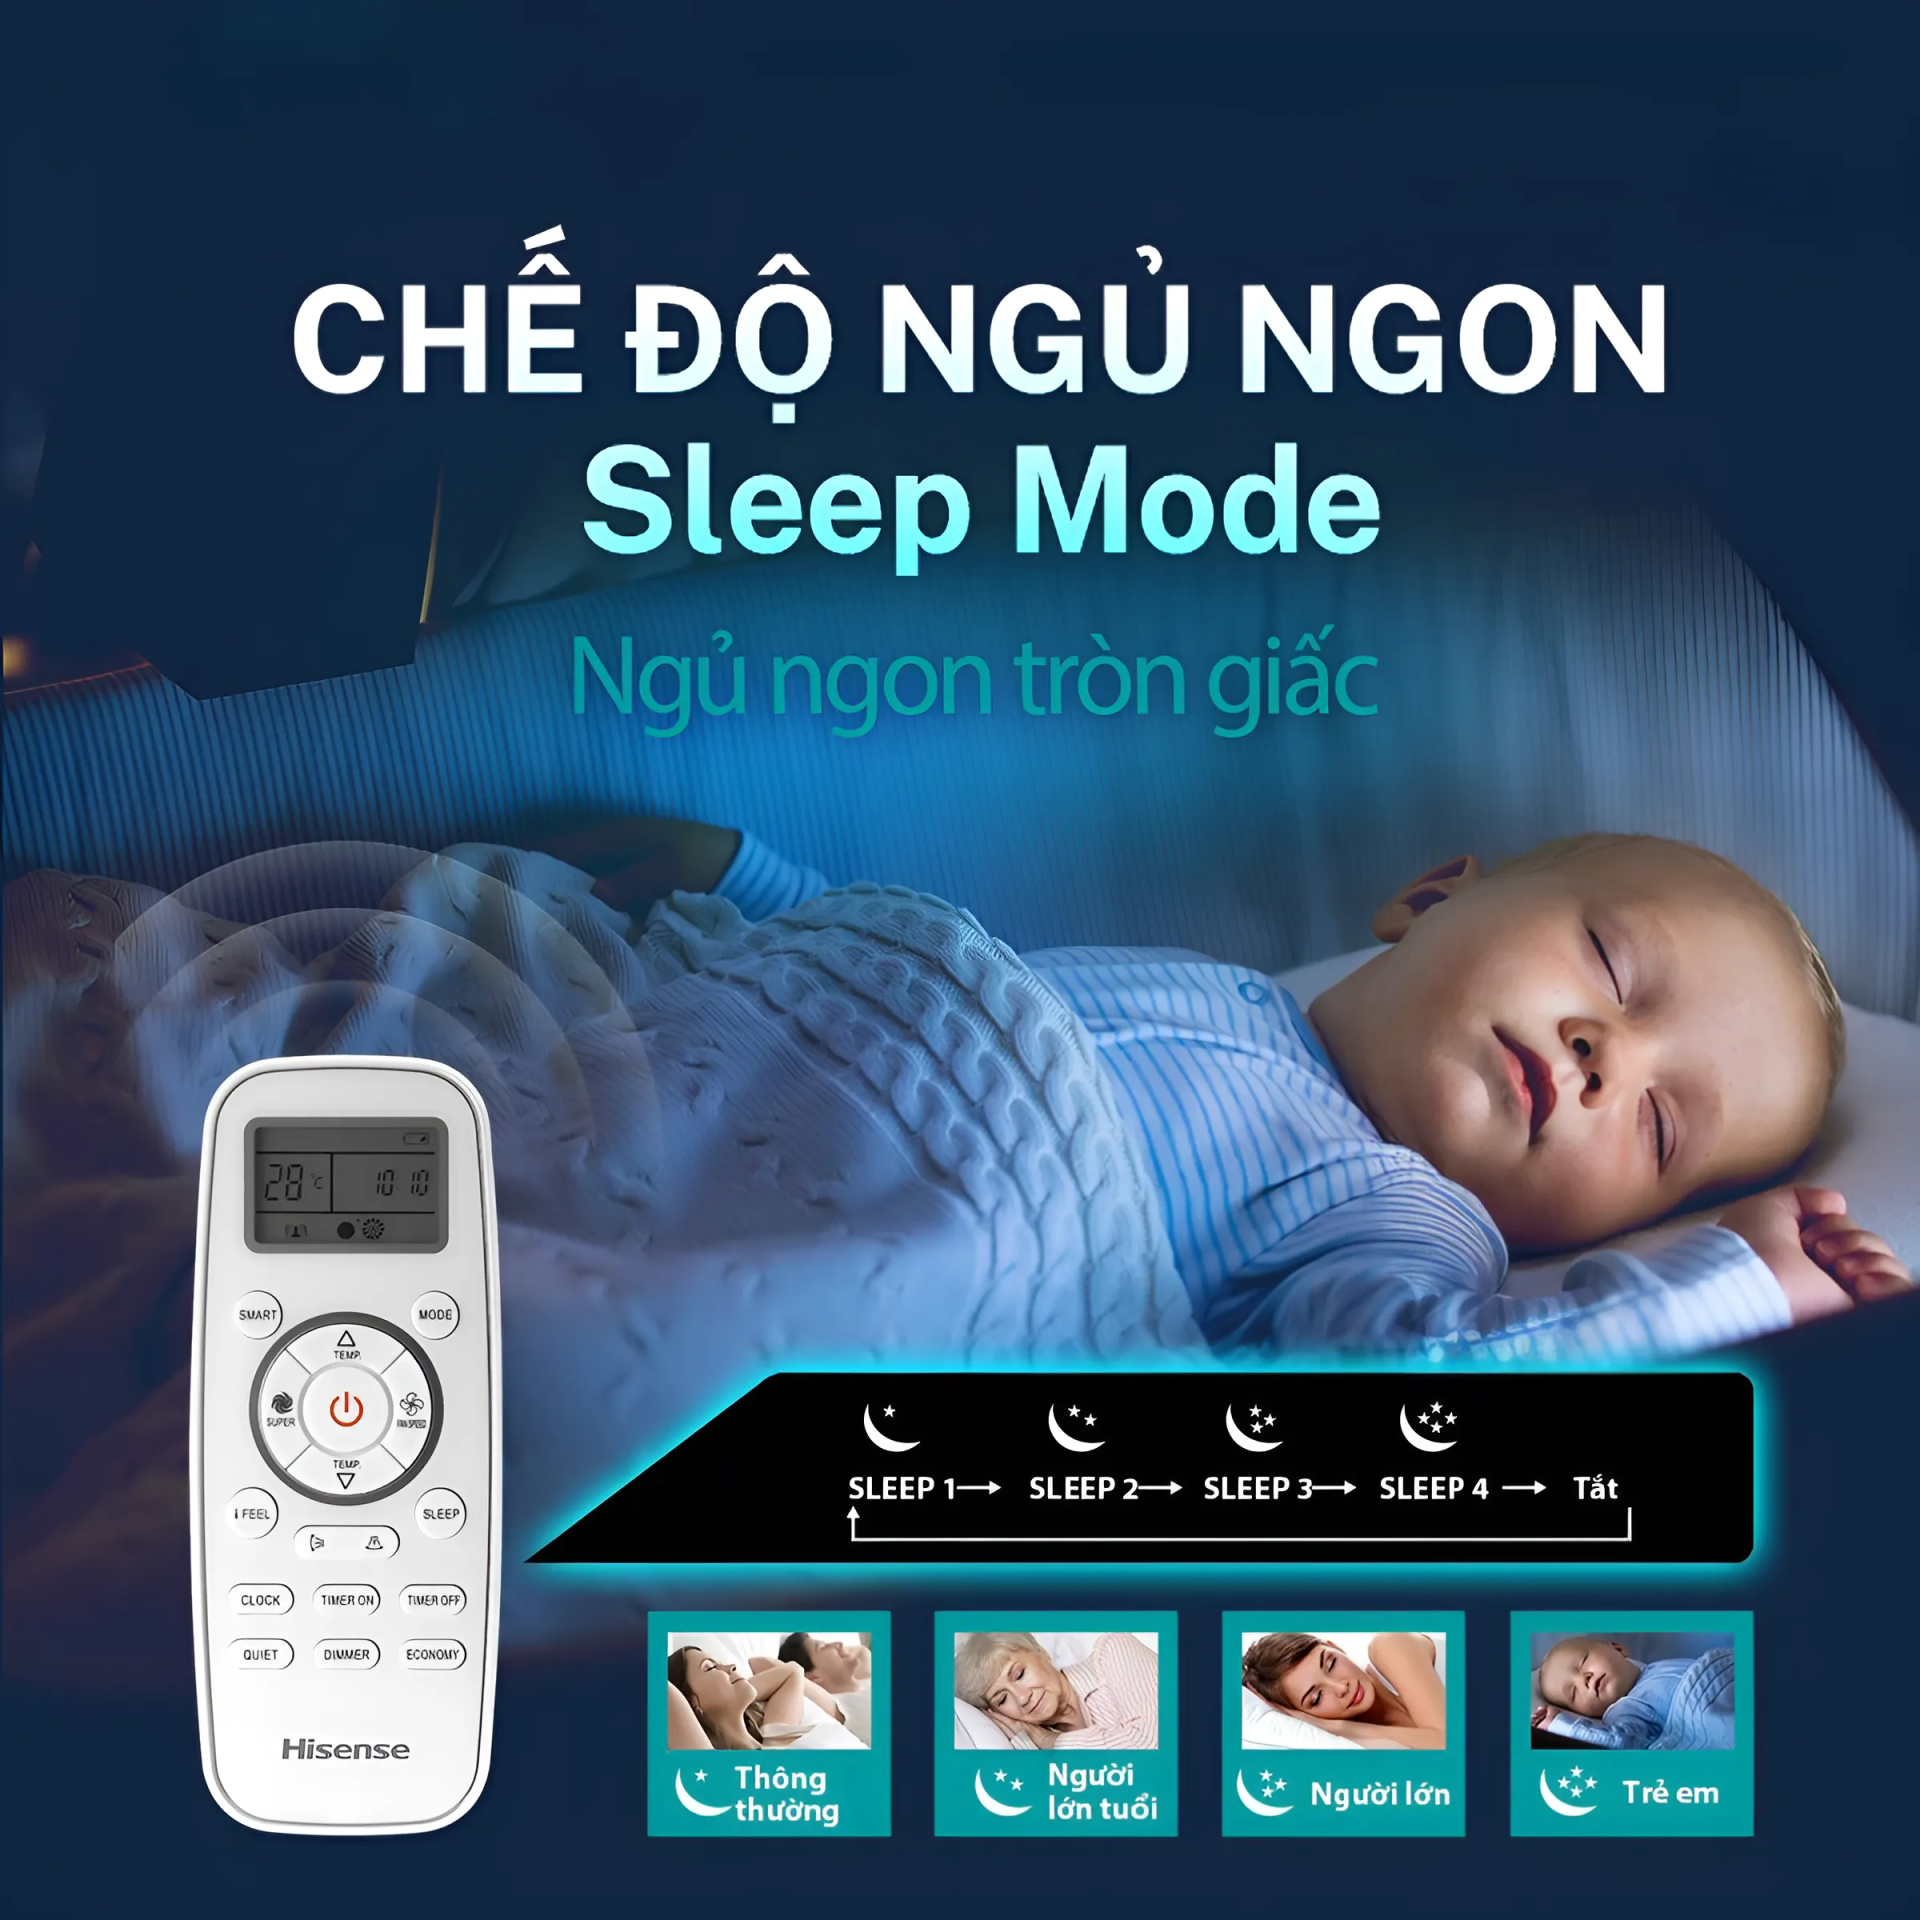 Ngu-ngon-hon-voi-che-do-Sleep-Mode